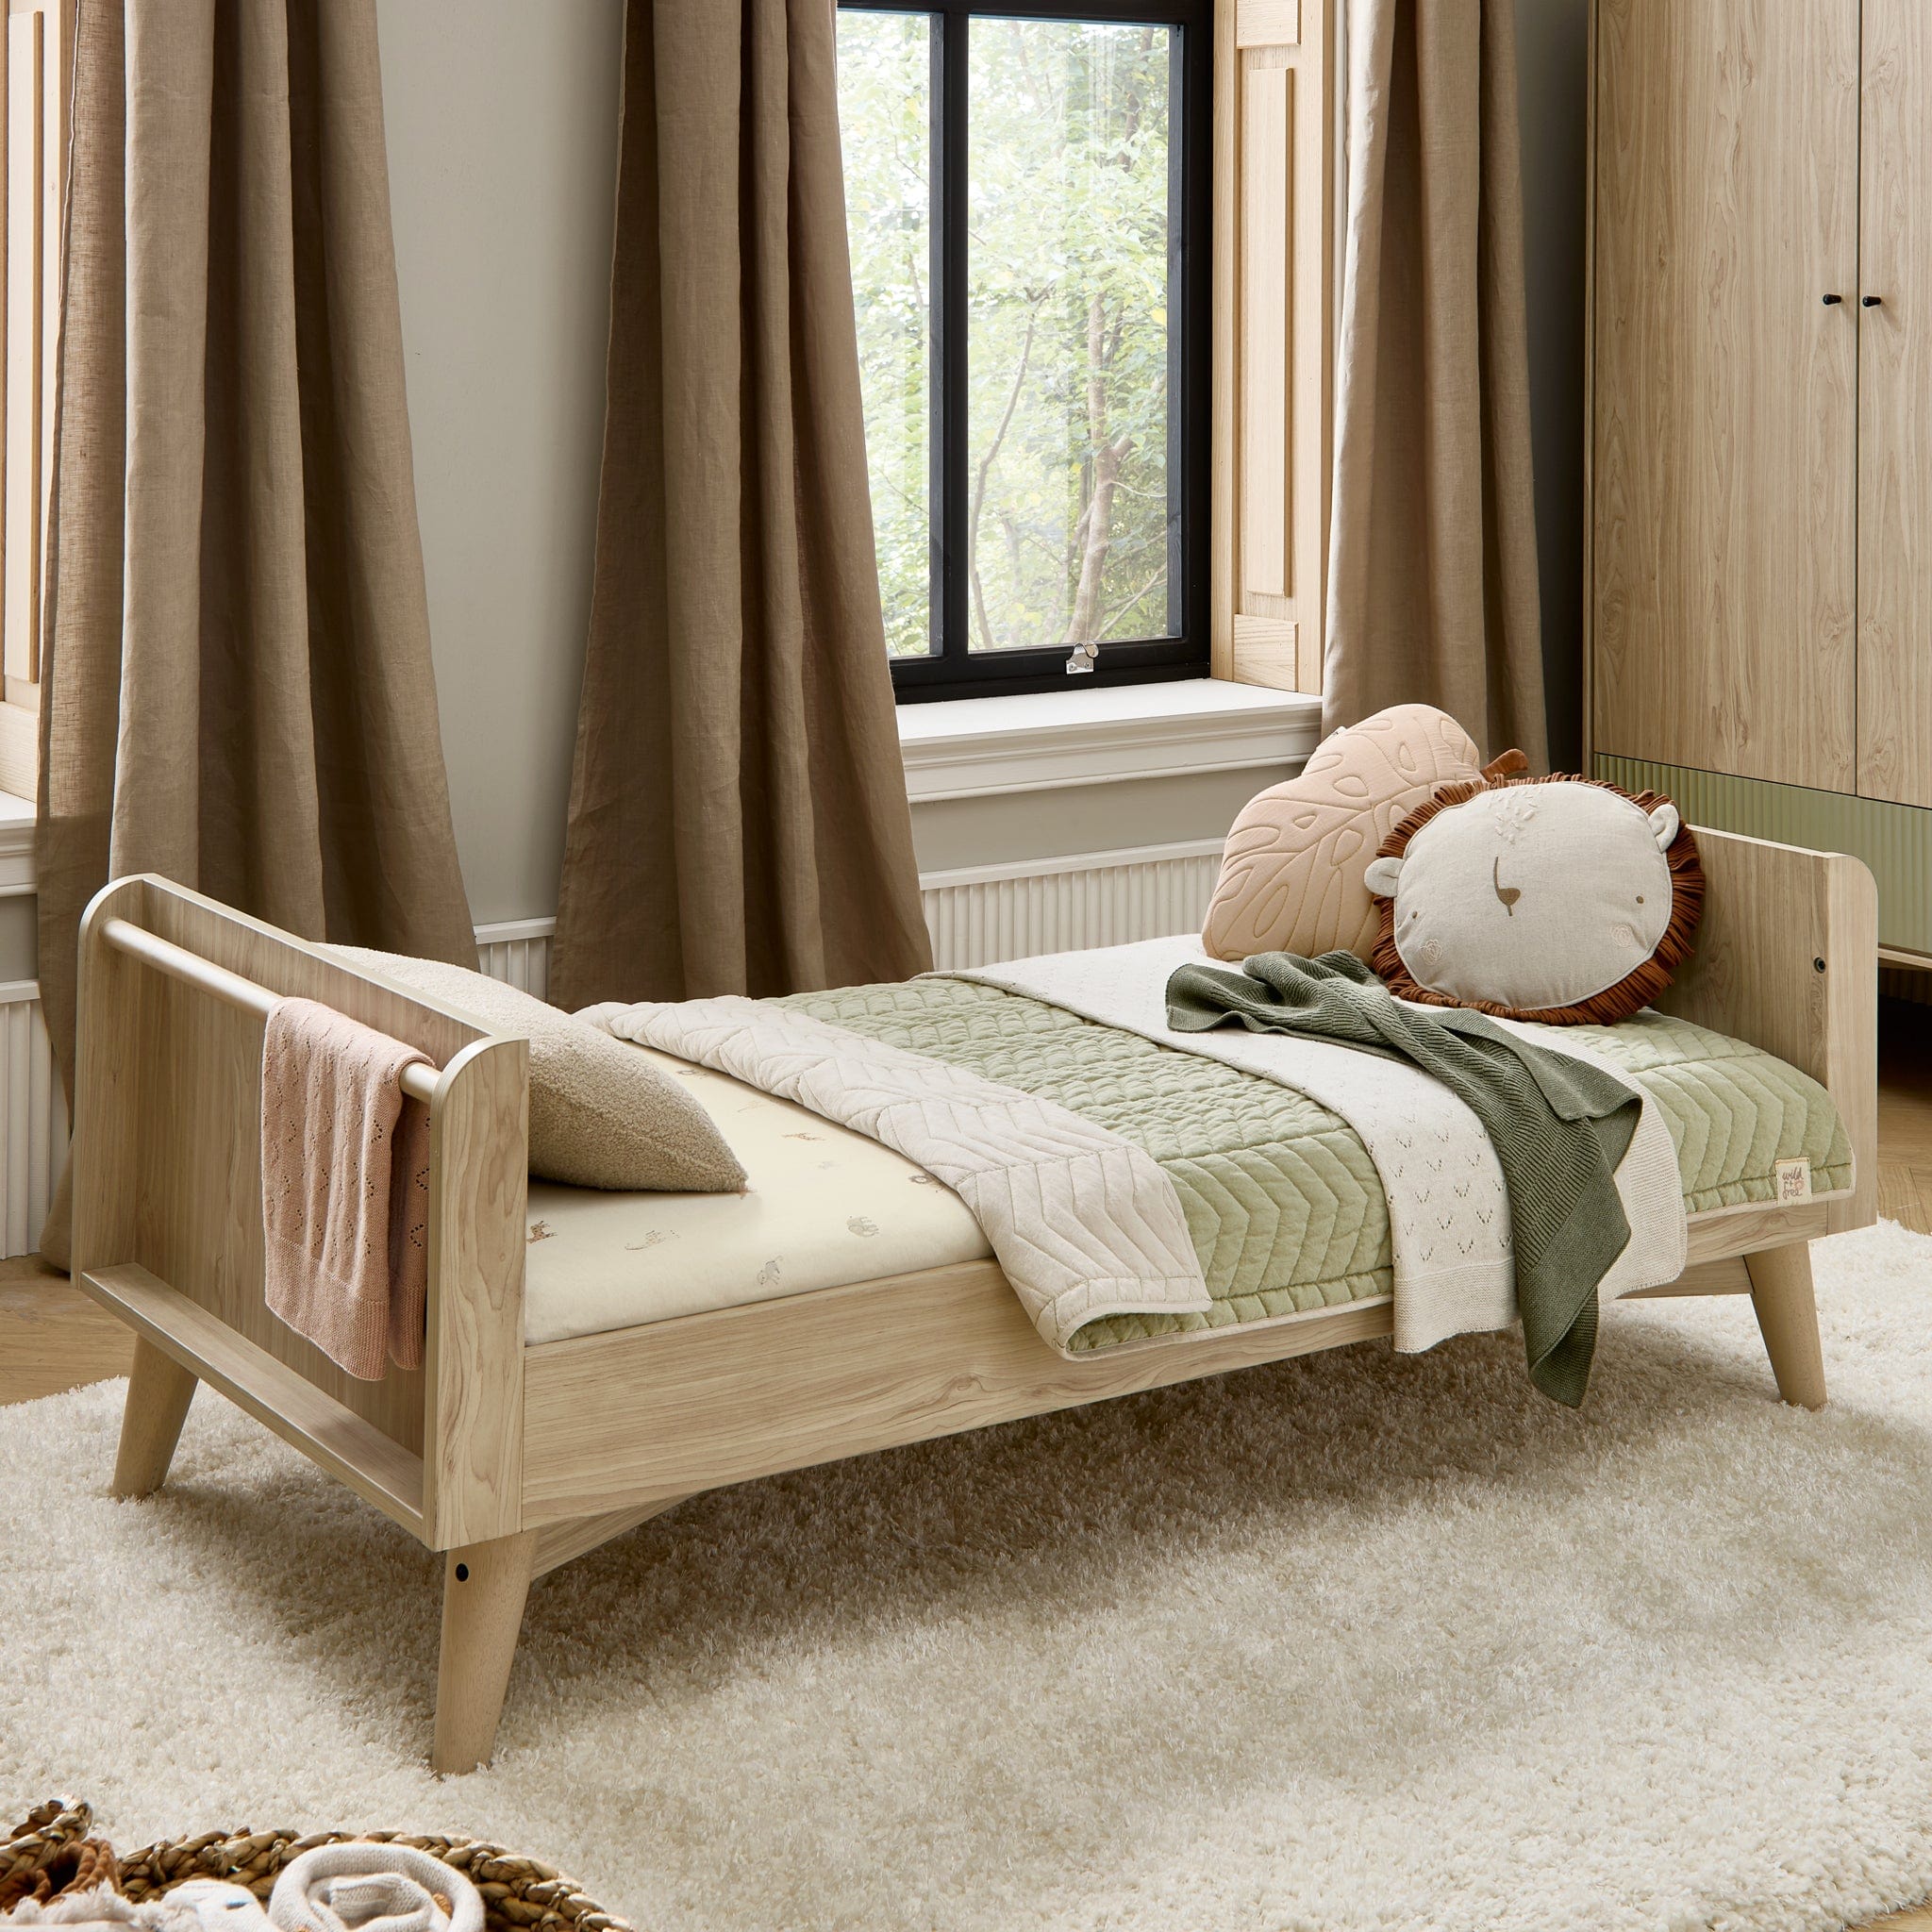 Mamas & Papas cot bed room sets Mamas & Papas Coxley 3 Piece Cotbed Range in Natural/Olive